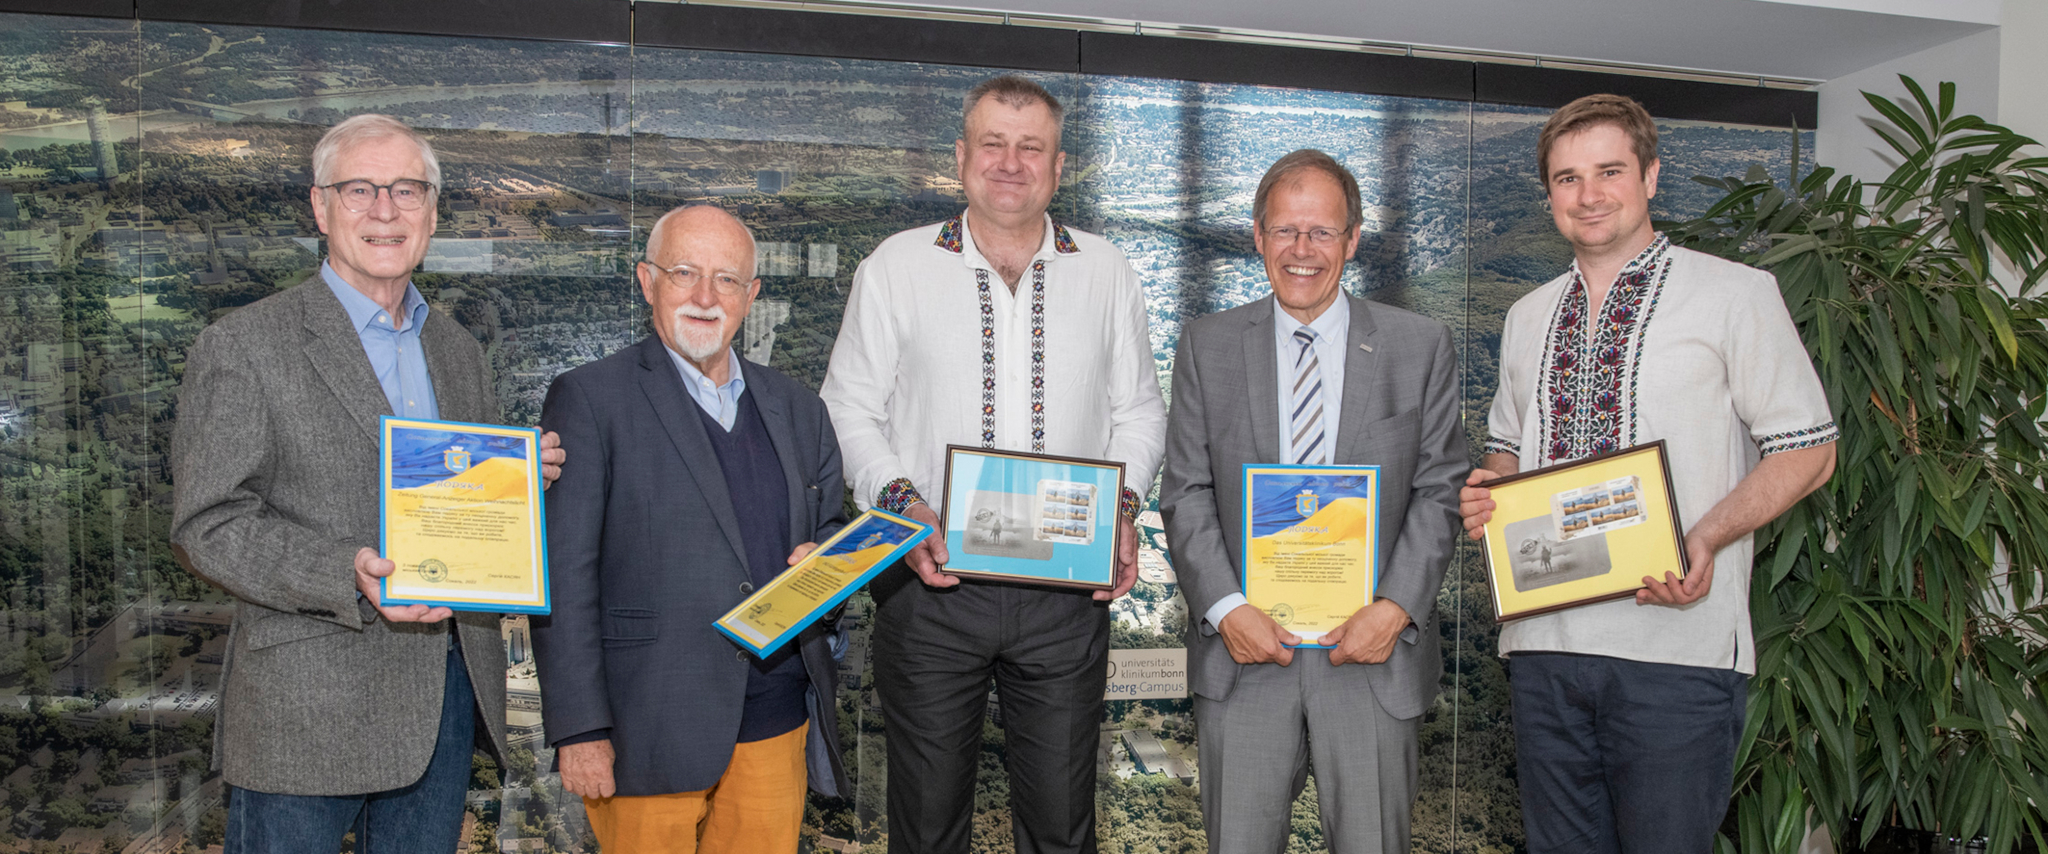 Landrat von Lviv besucht das Universitätsklinikum Bonn